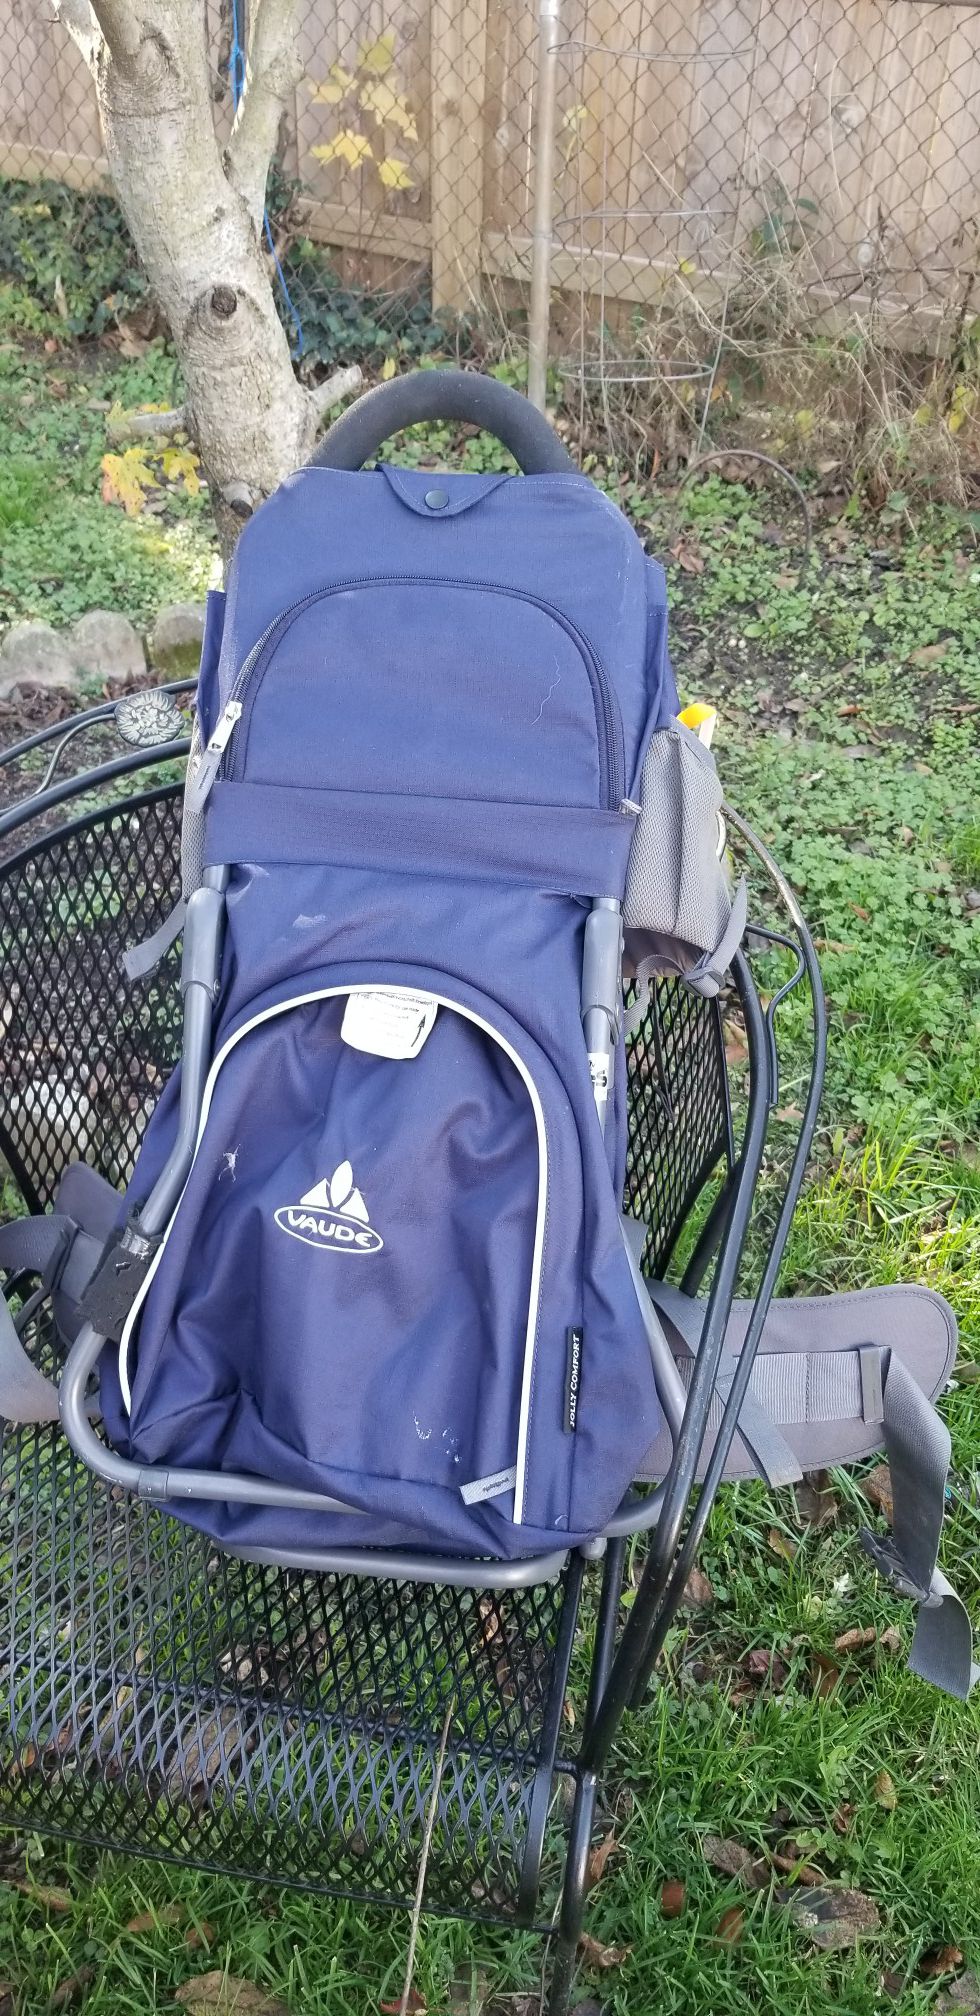 Voude child carrier hiking backpack